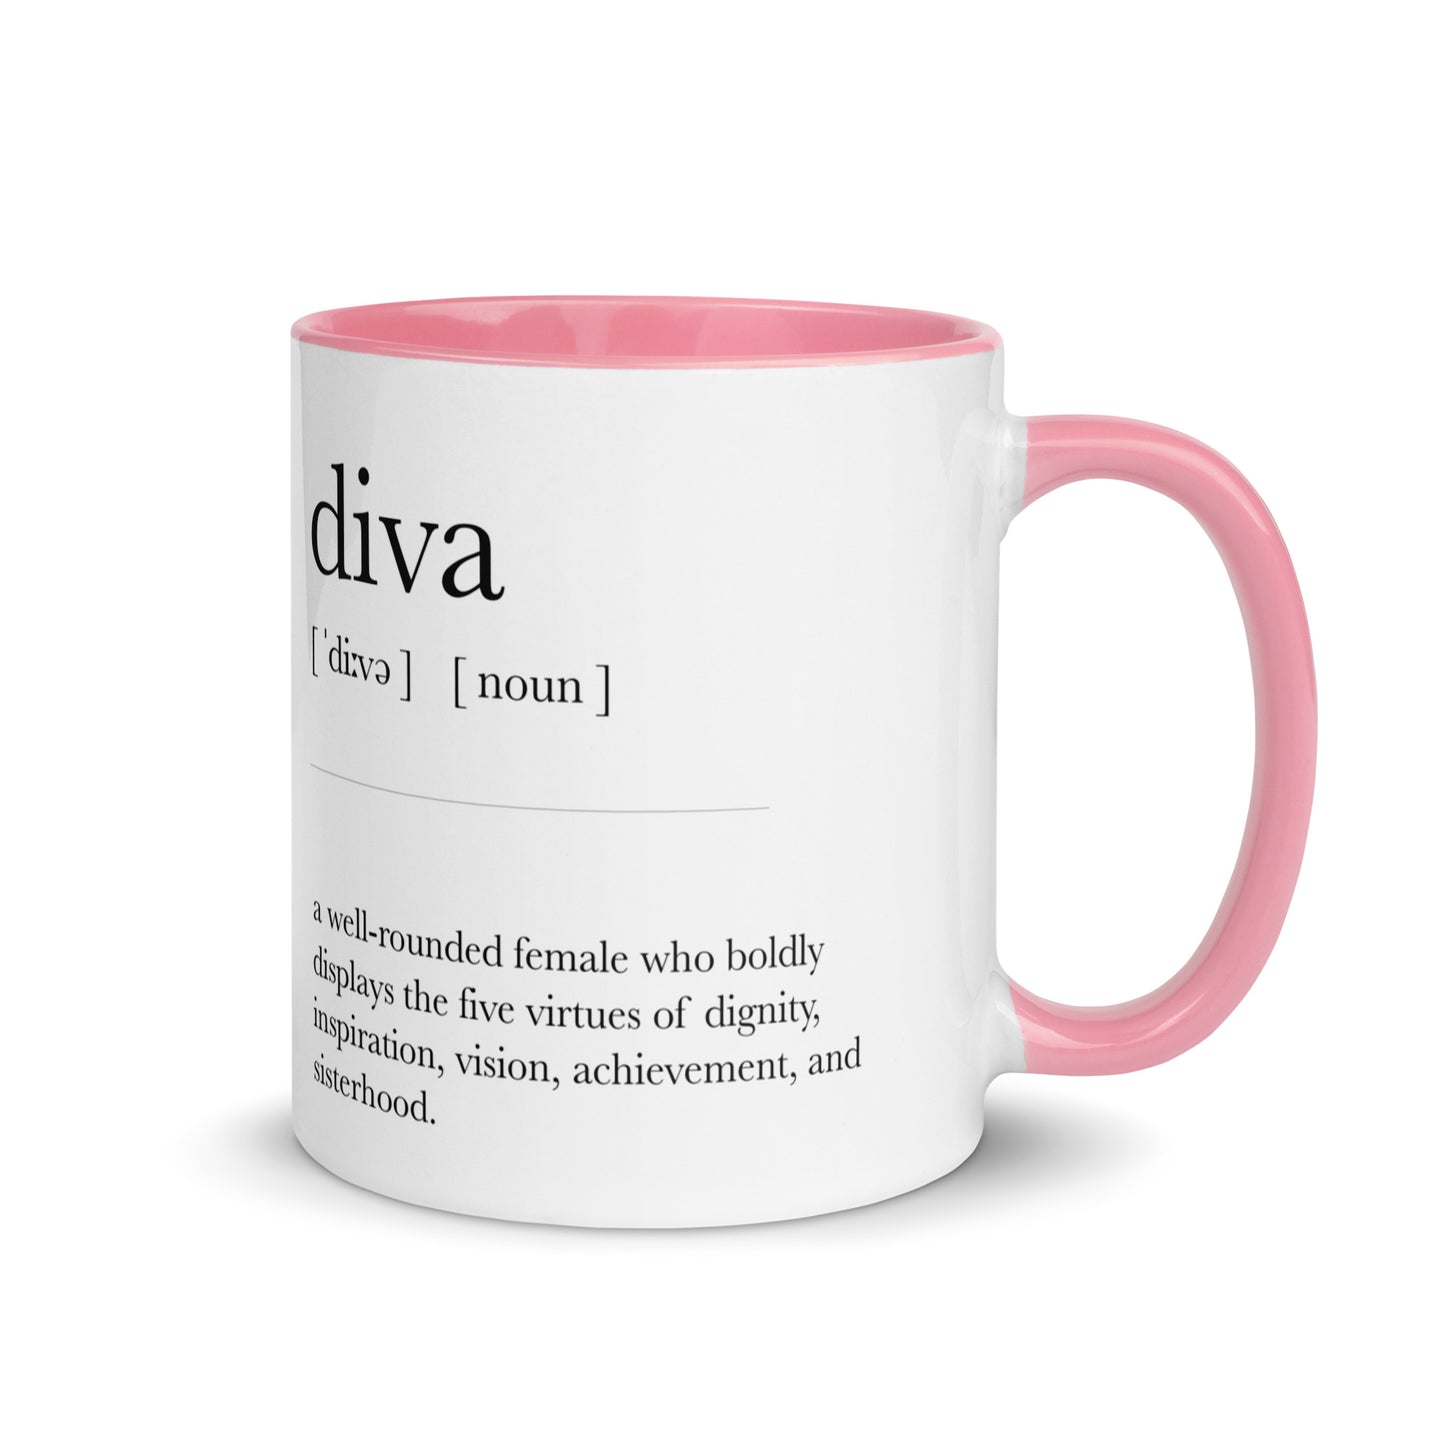 Diva Definition Mug